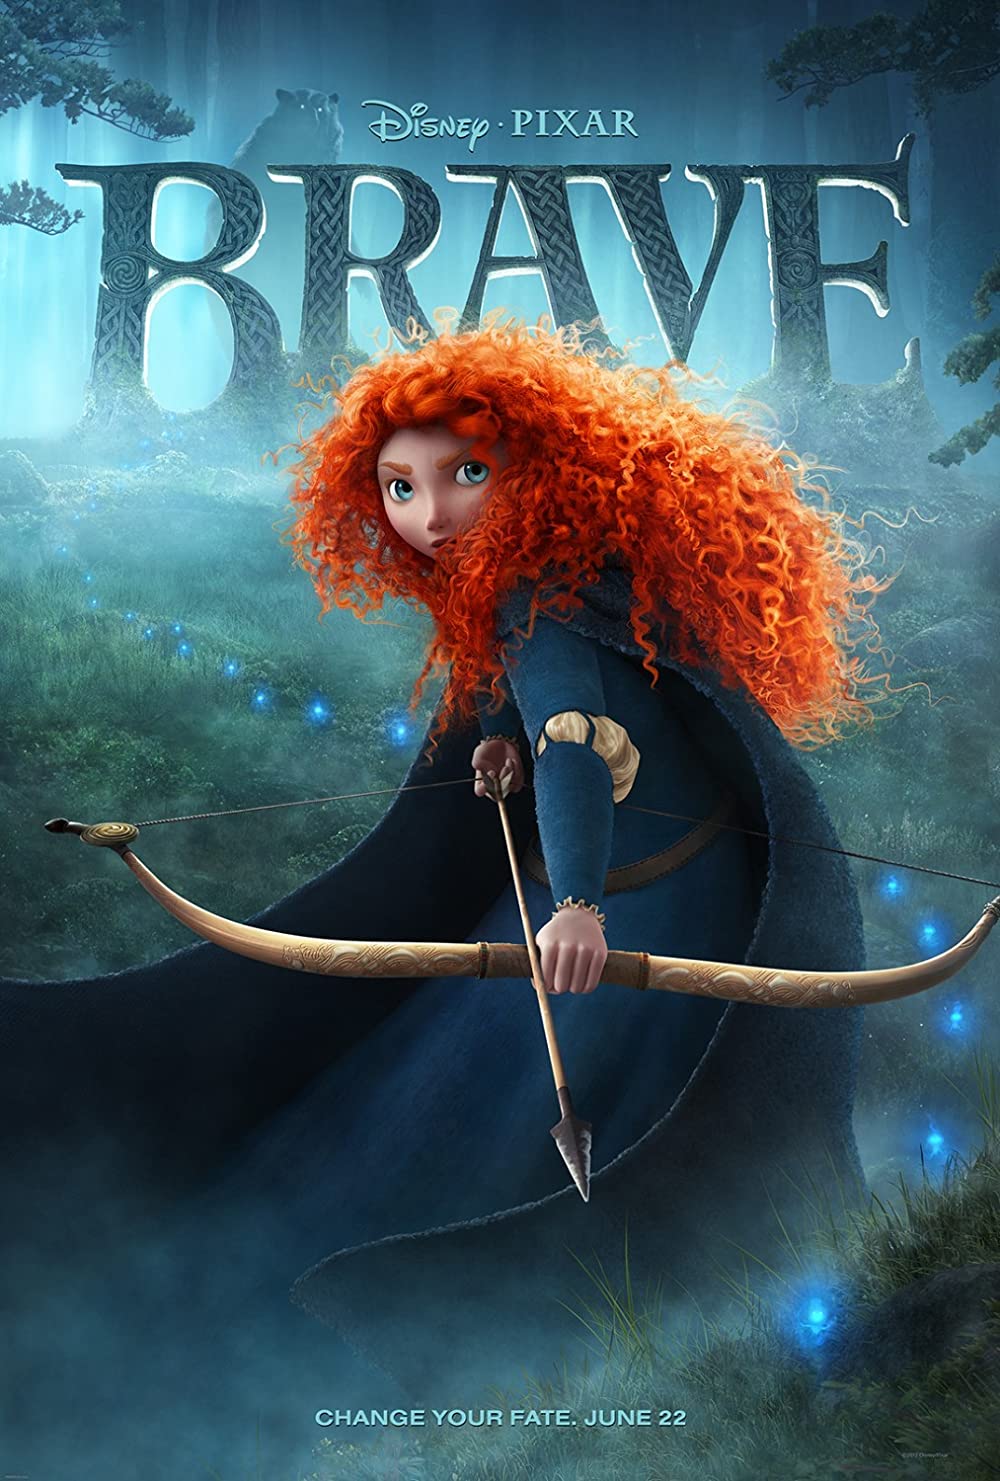 FULL MOVIE: Brave (2012) [Action]